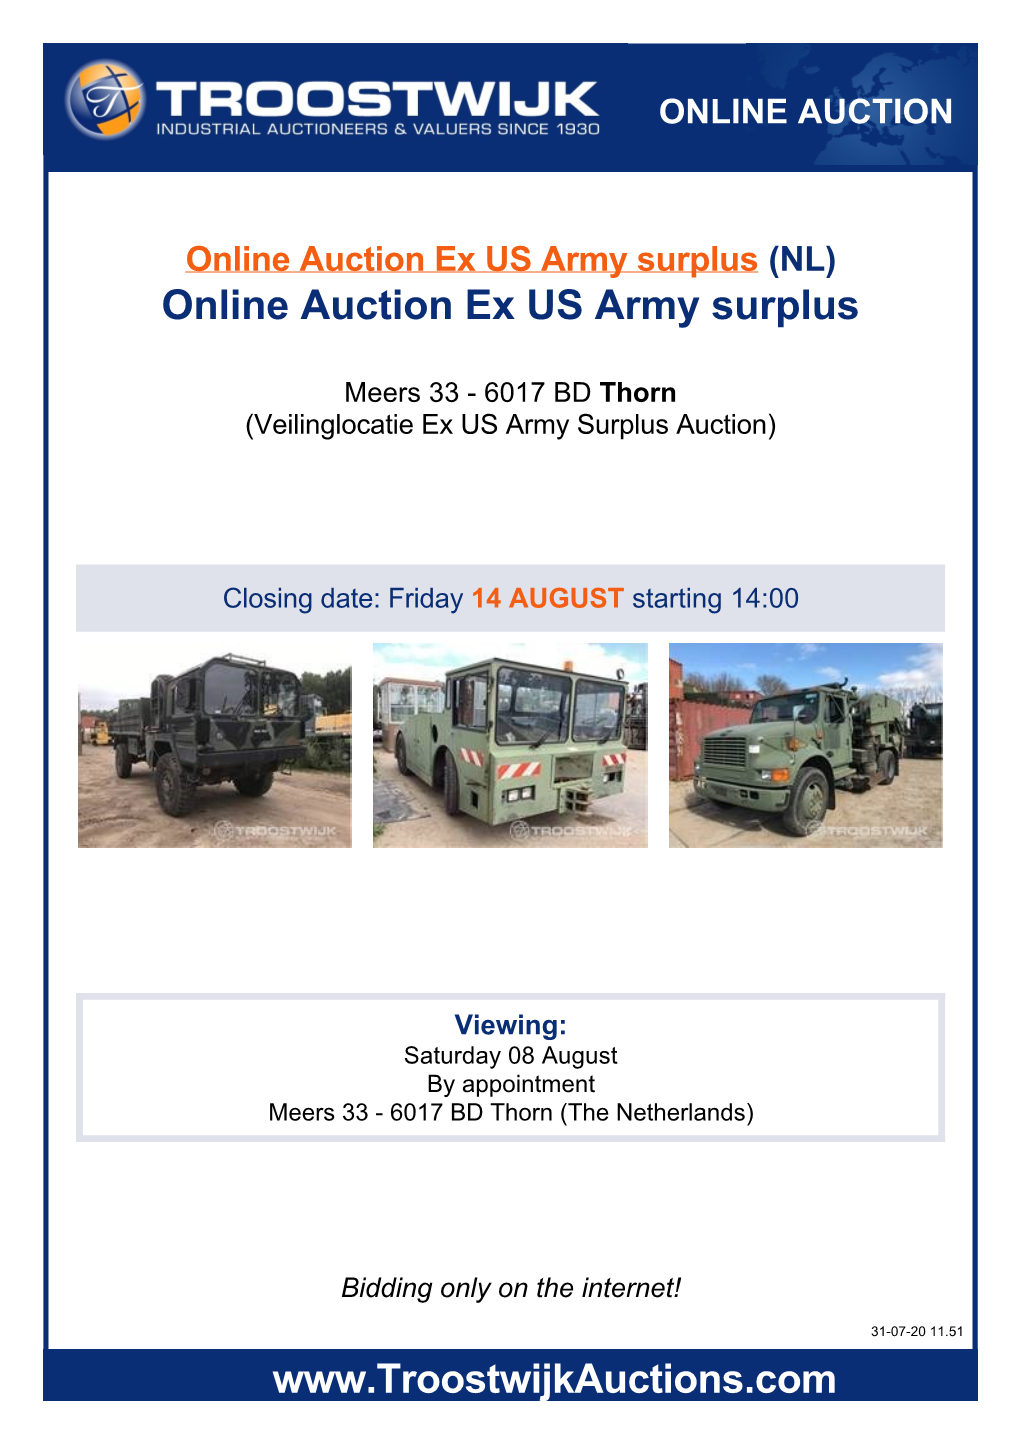 Online Auction Ex US Army Surplus (NL) Online Auction Ex US Army Surplus